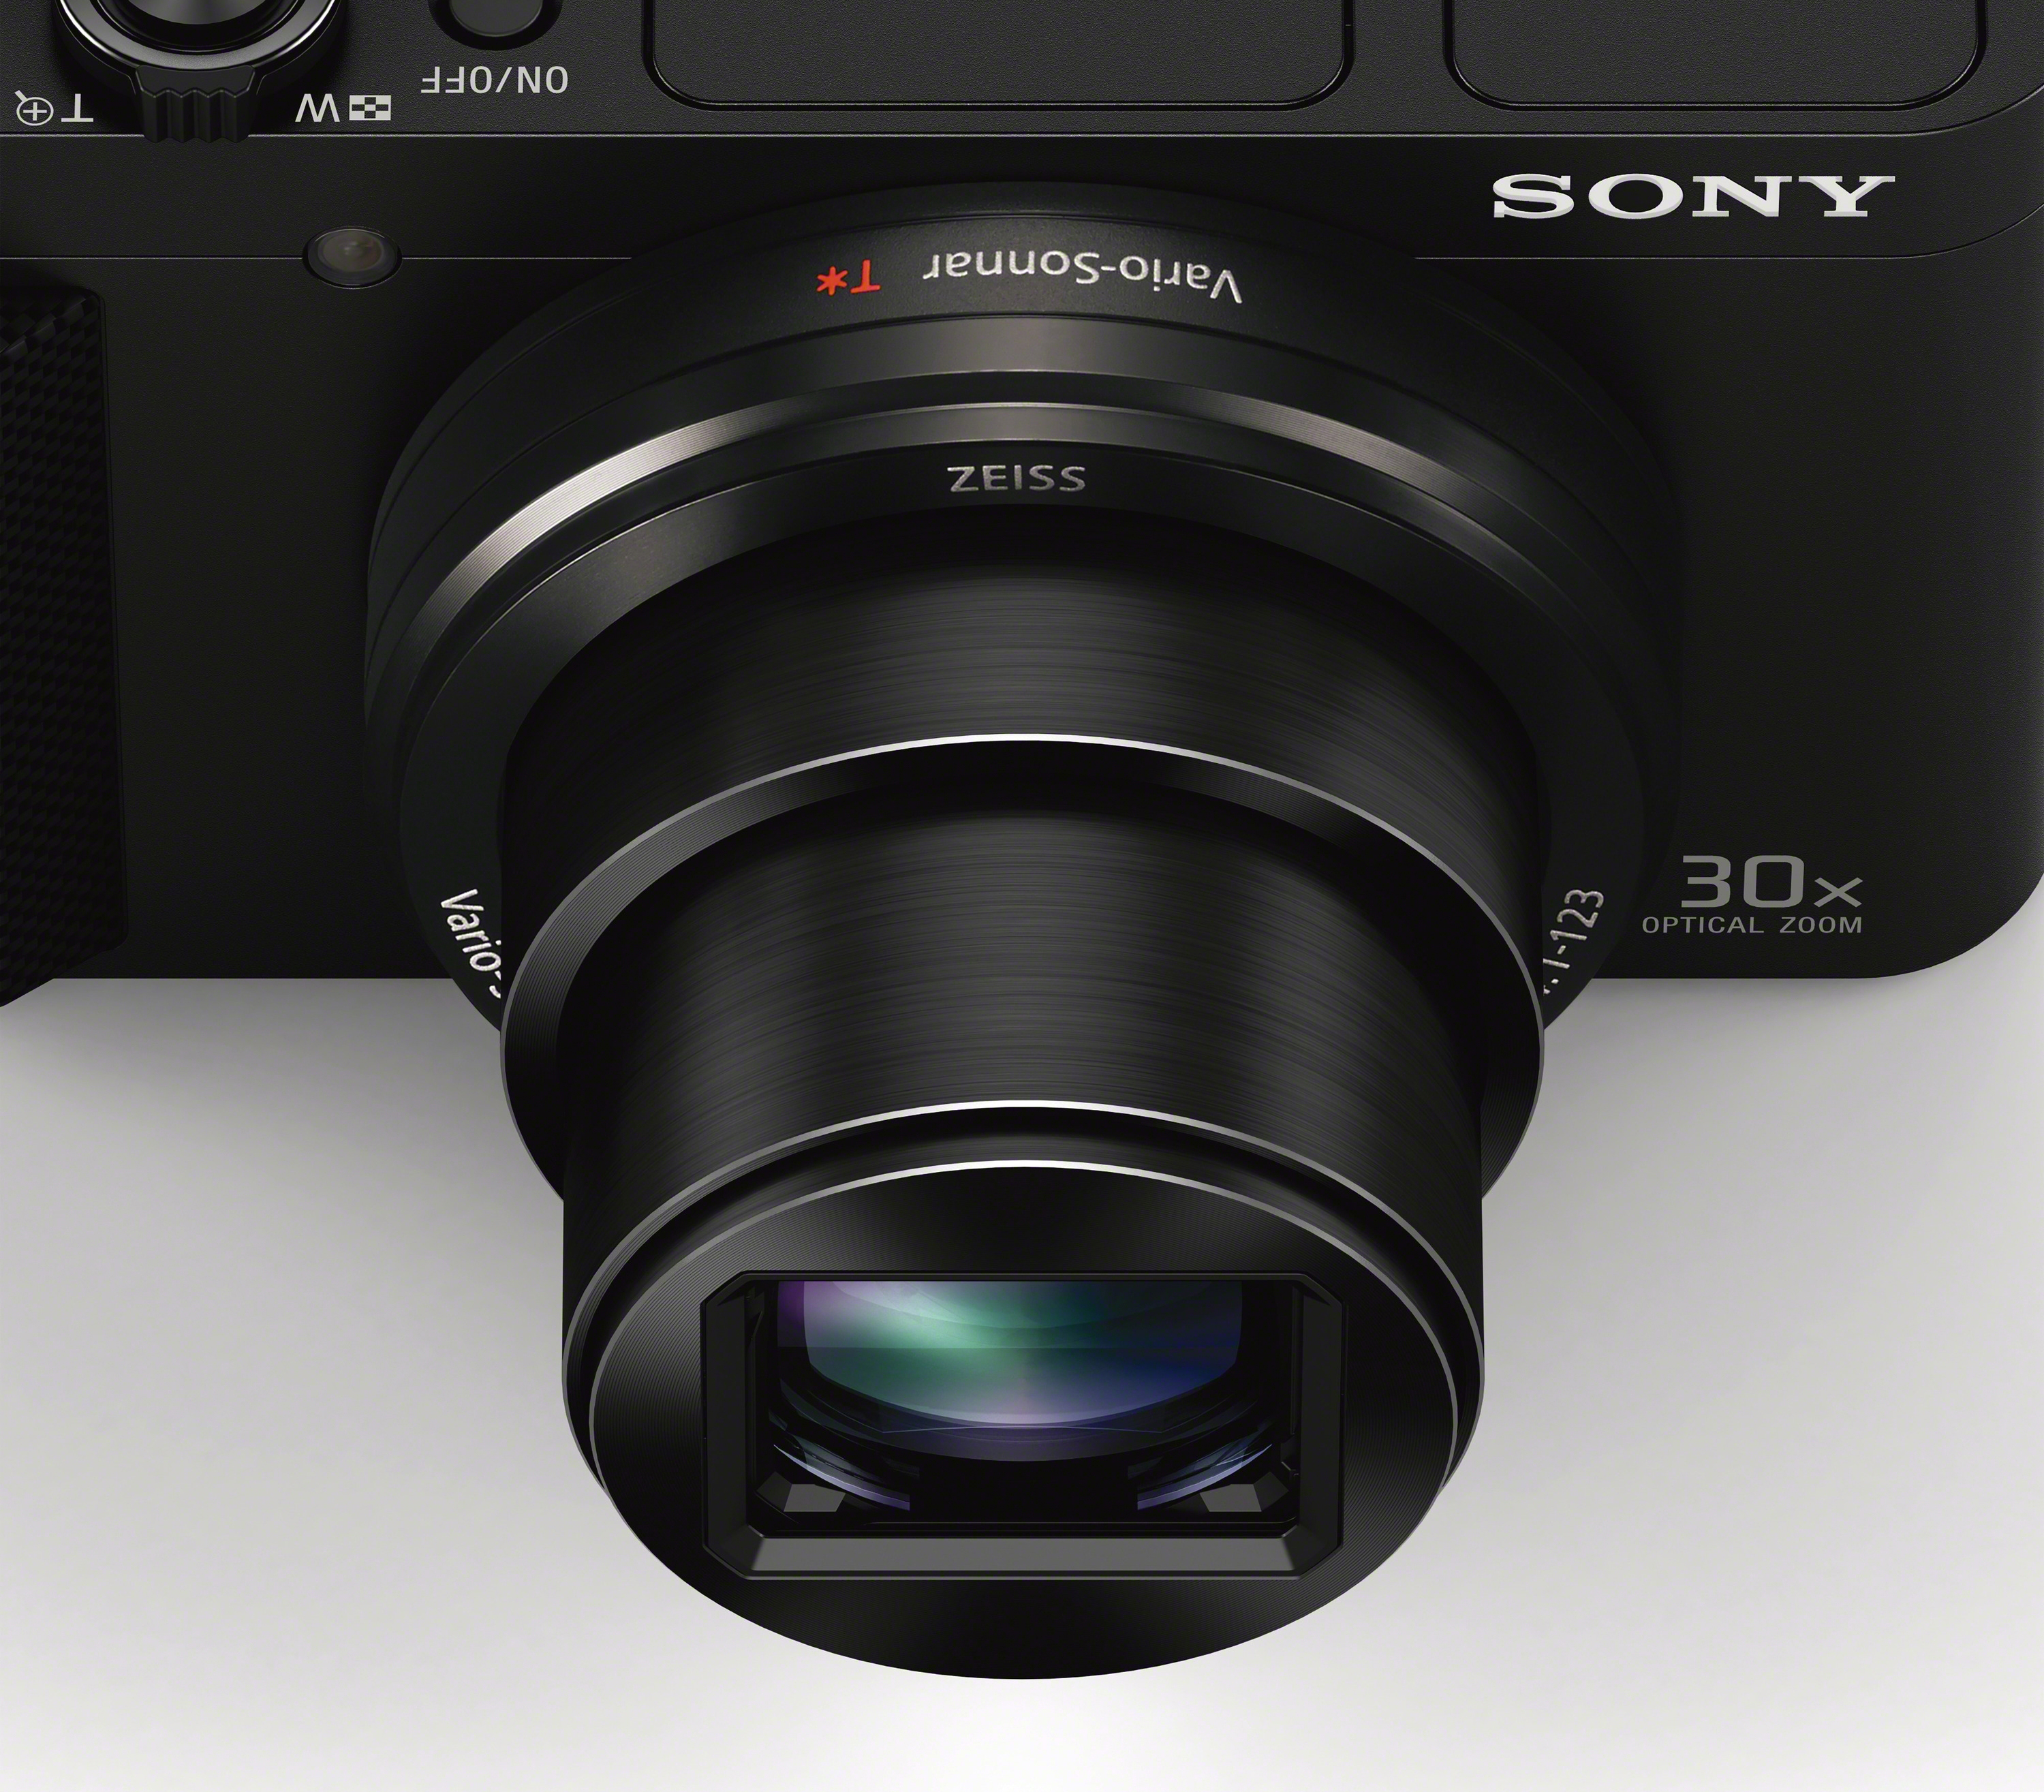 Zeiss Schwarz, LCD, Zoom, Digitalkamera DSC-HX80 Fine NFC Xtra 30x WLAN opt. , Cyber-shot SONY